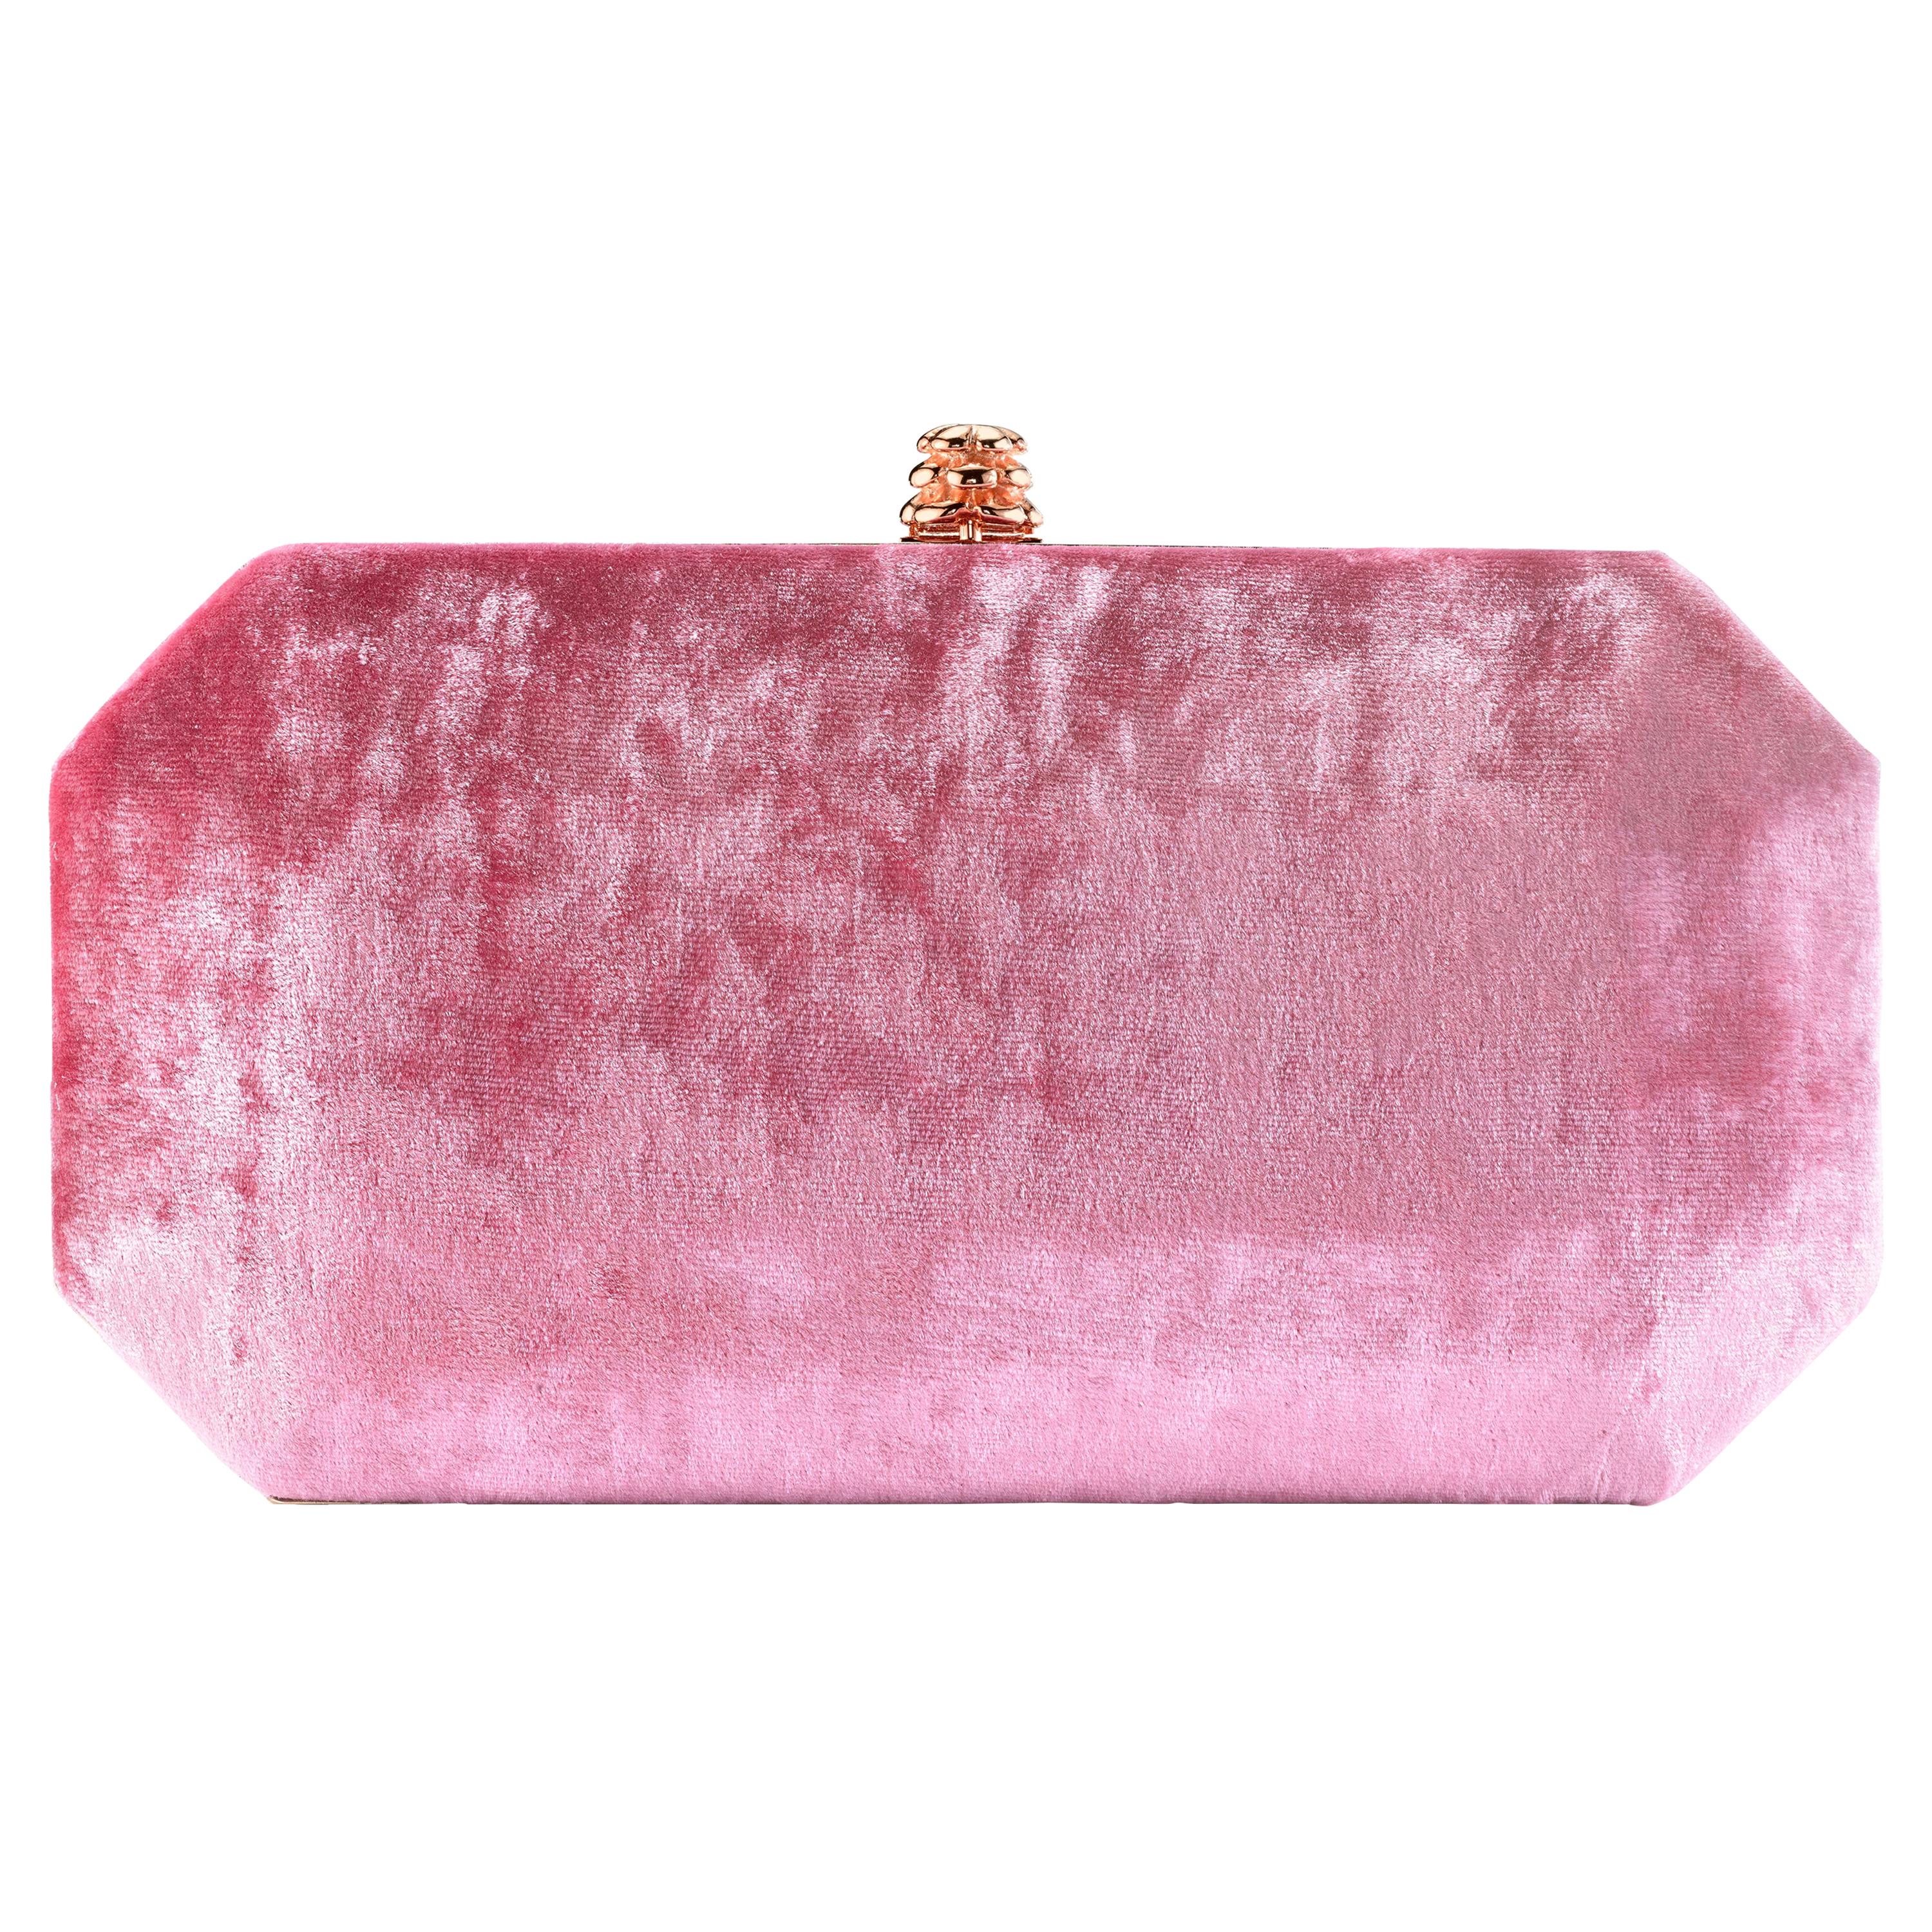 TYLER ELLIS Perry Small Clutch Dark Pink Crushed Velvet Rose Gold Hardware